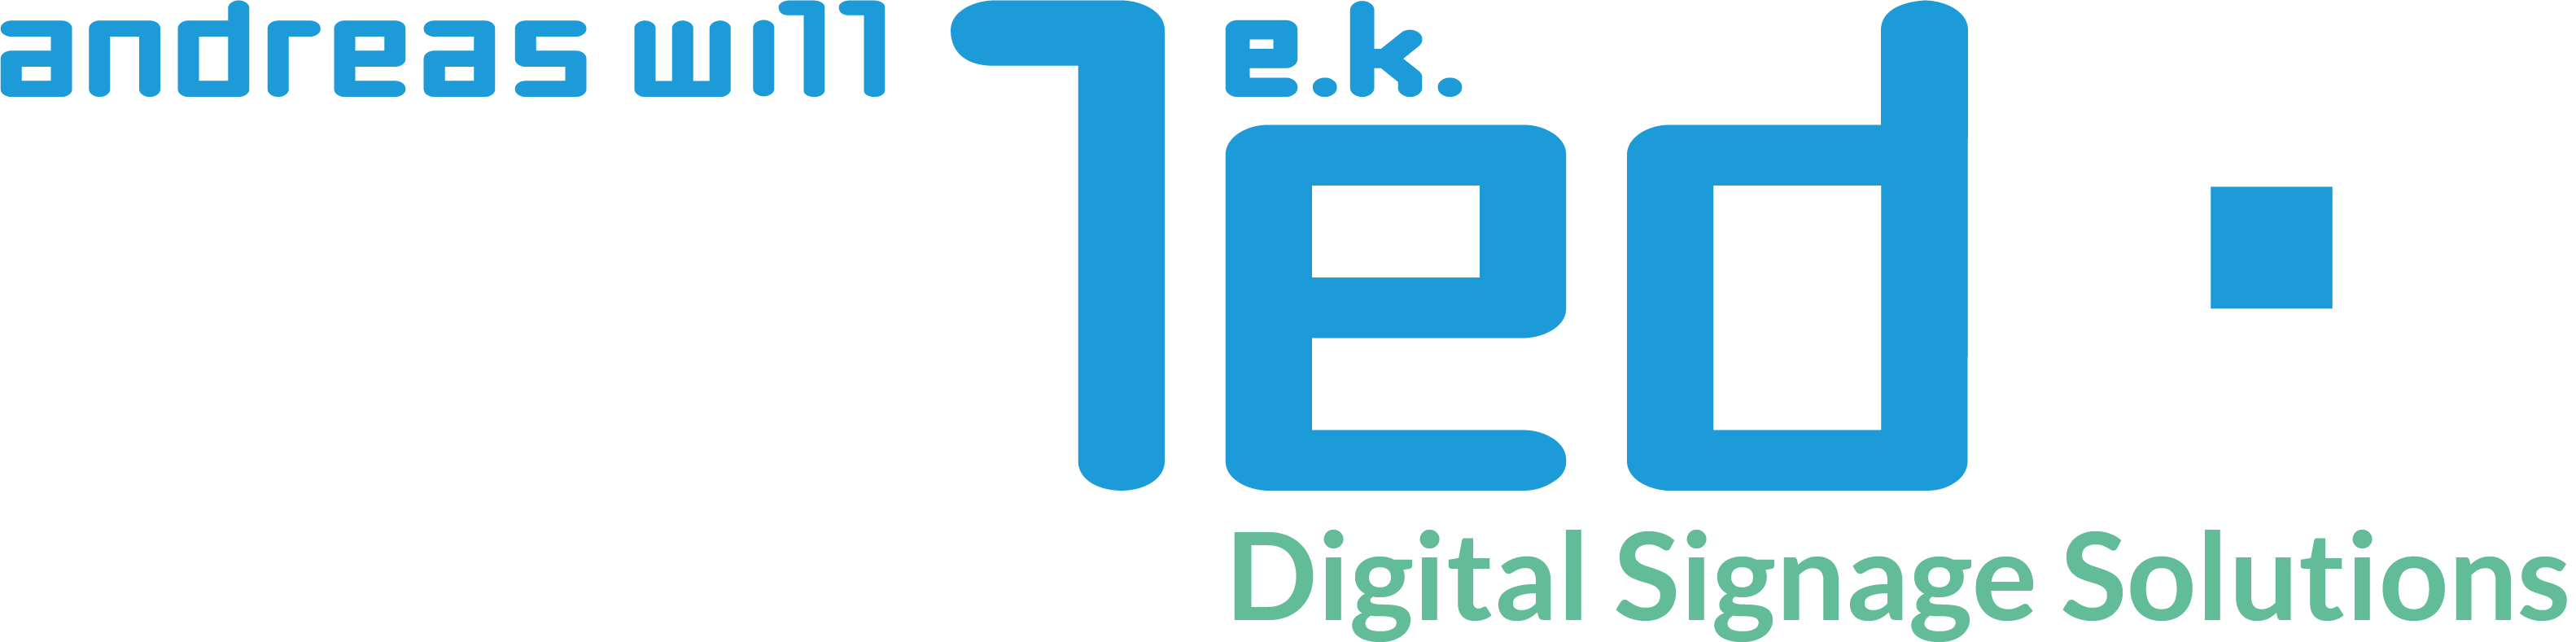 digital-signage-logo